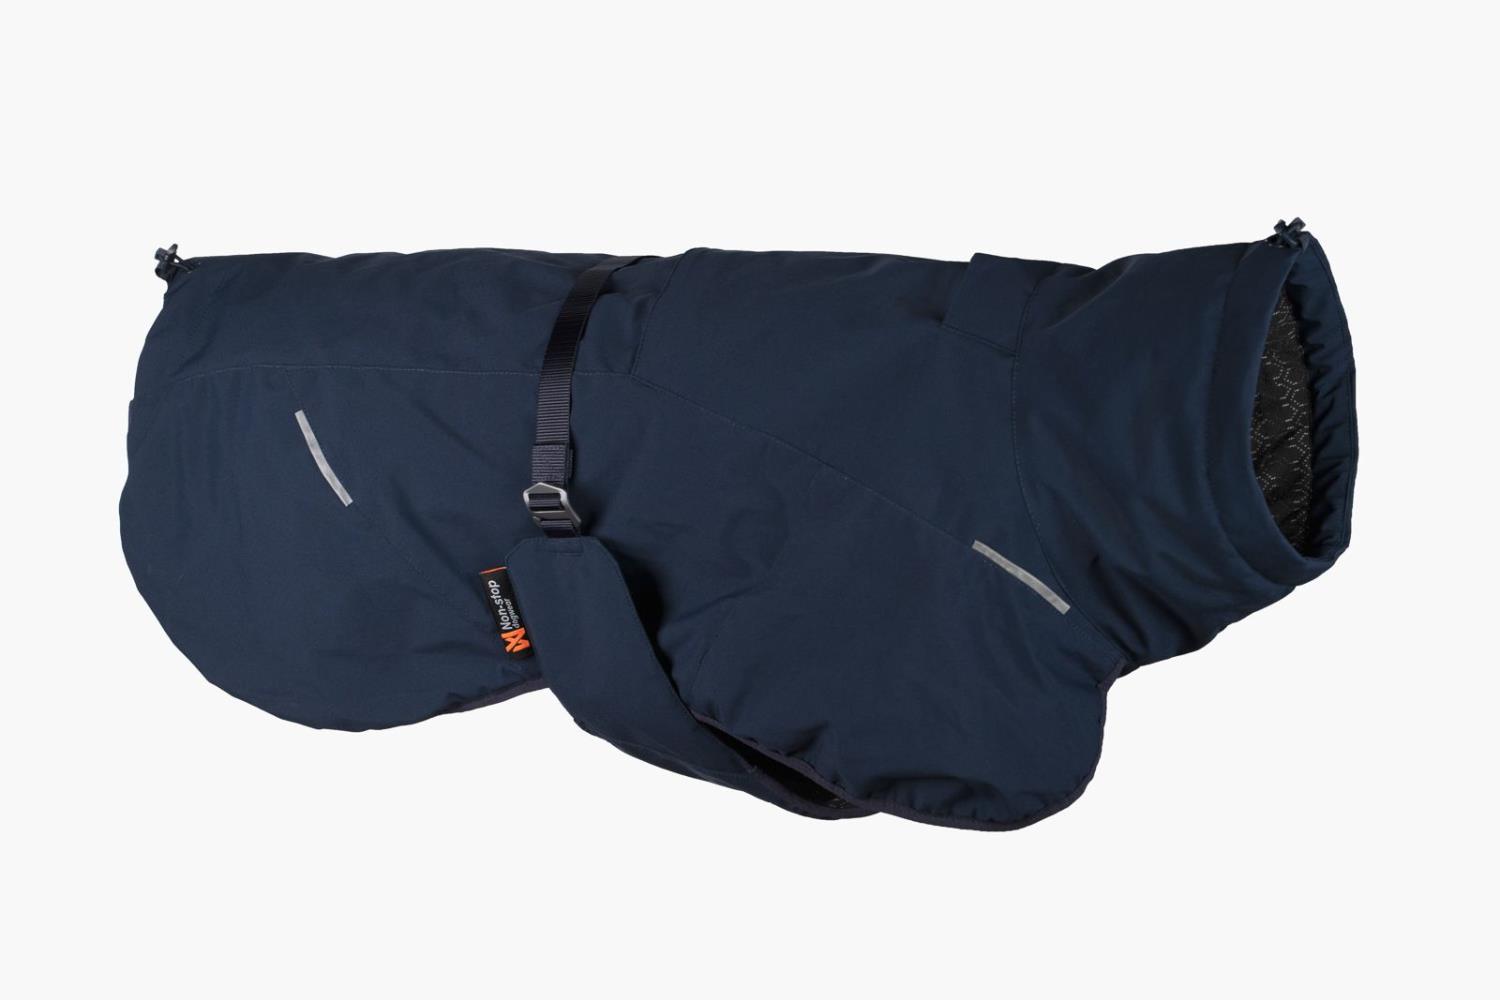 Glacier wool jacket 2.0, unisex, navy, 45, single